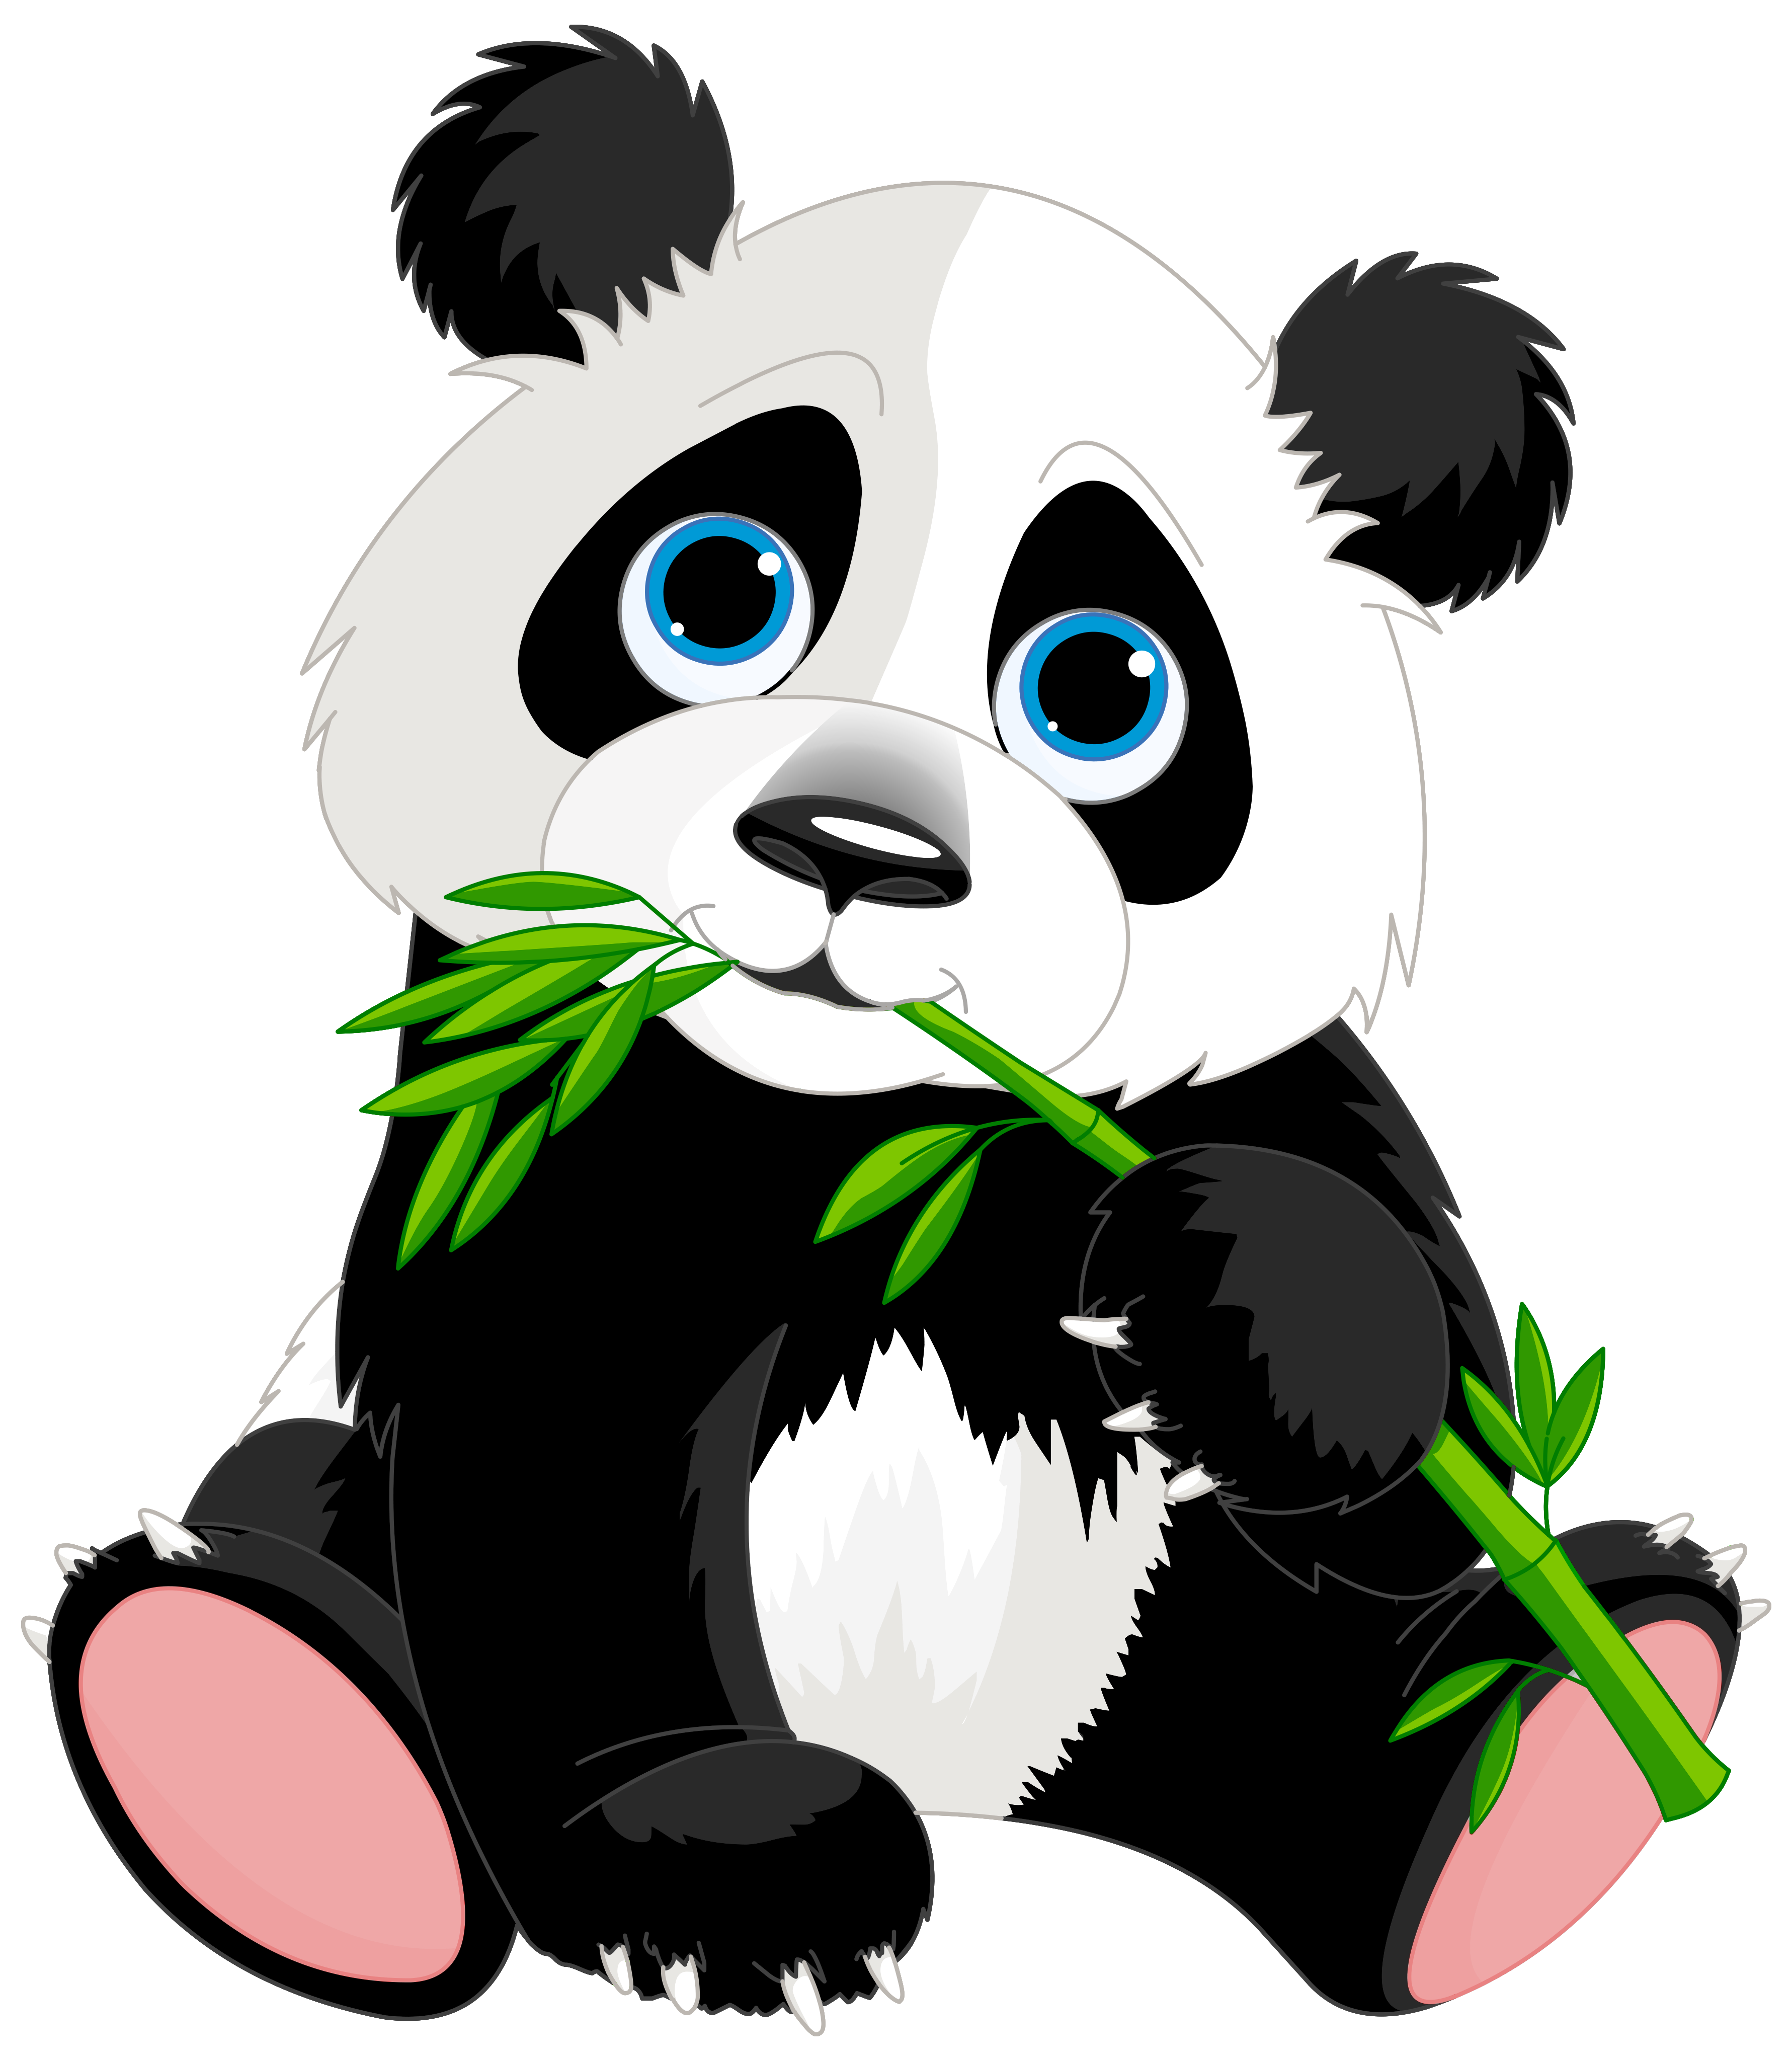 Panda Bear Clipart - Tumundografico